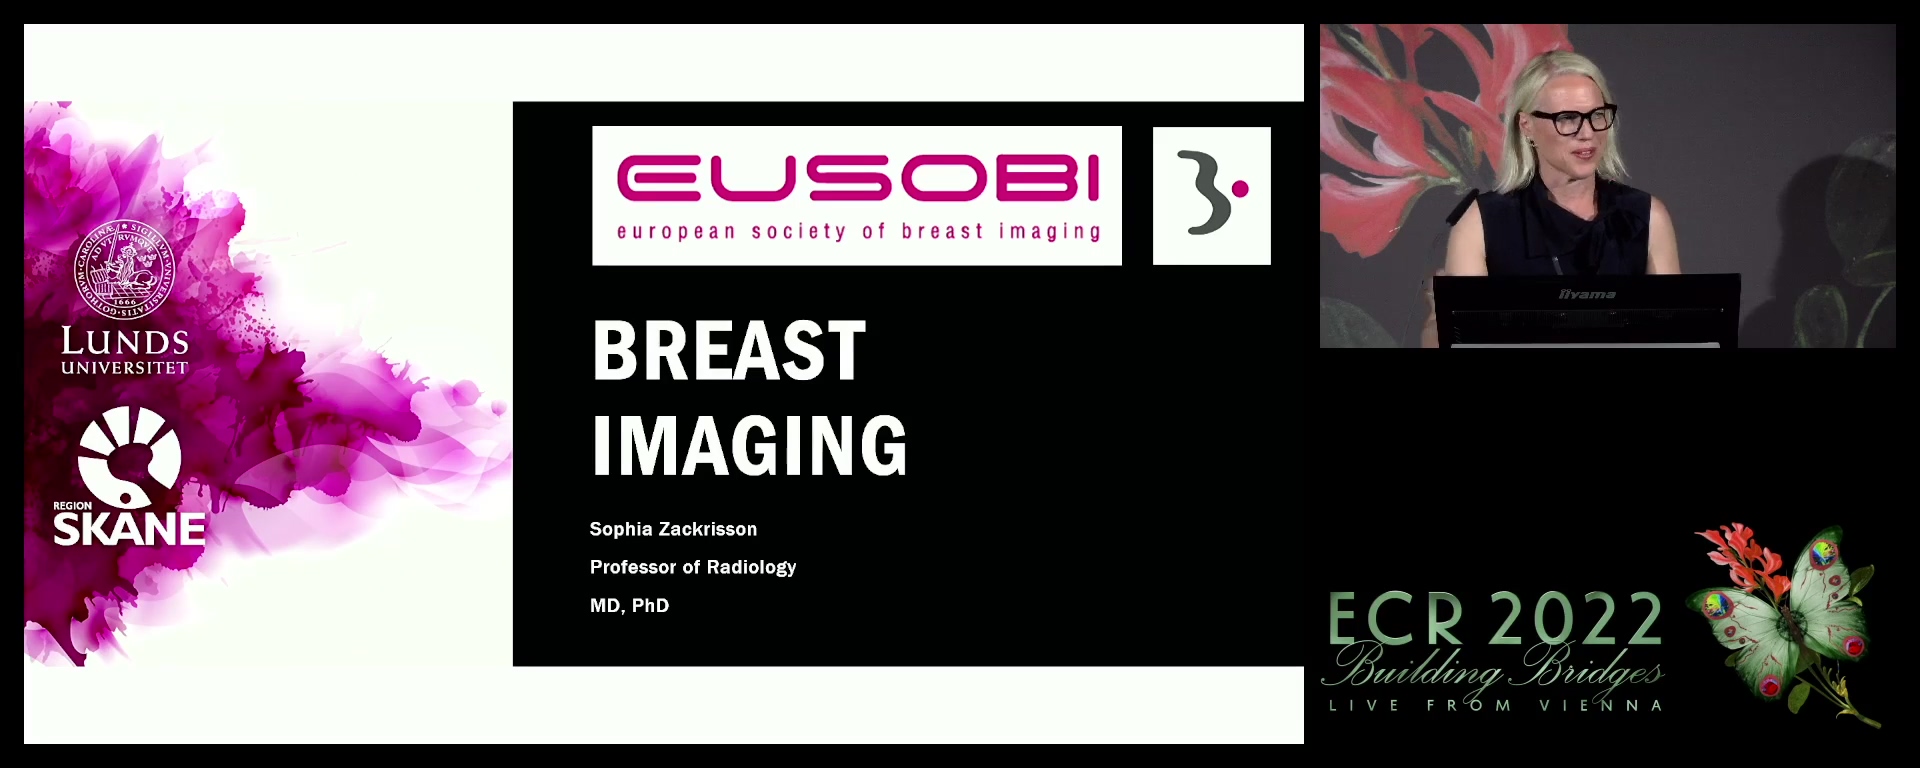 Breast imaging (EUSOBI)